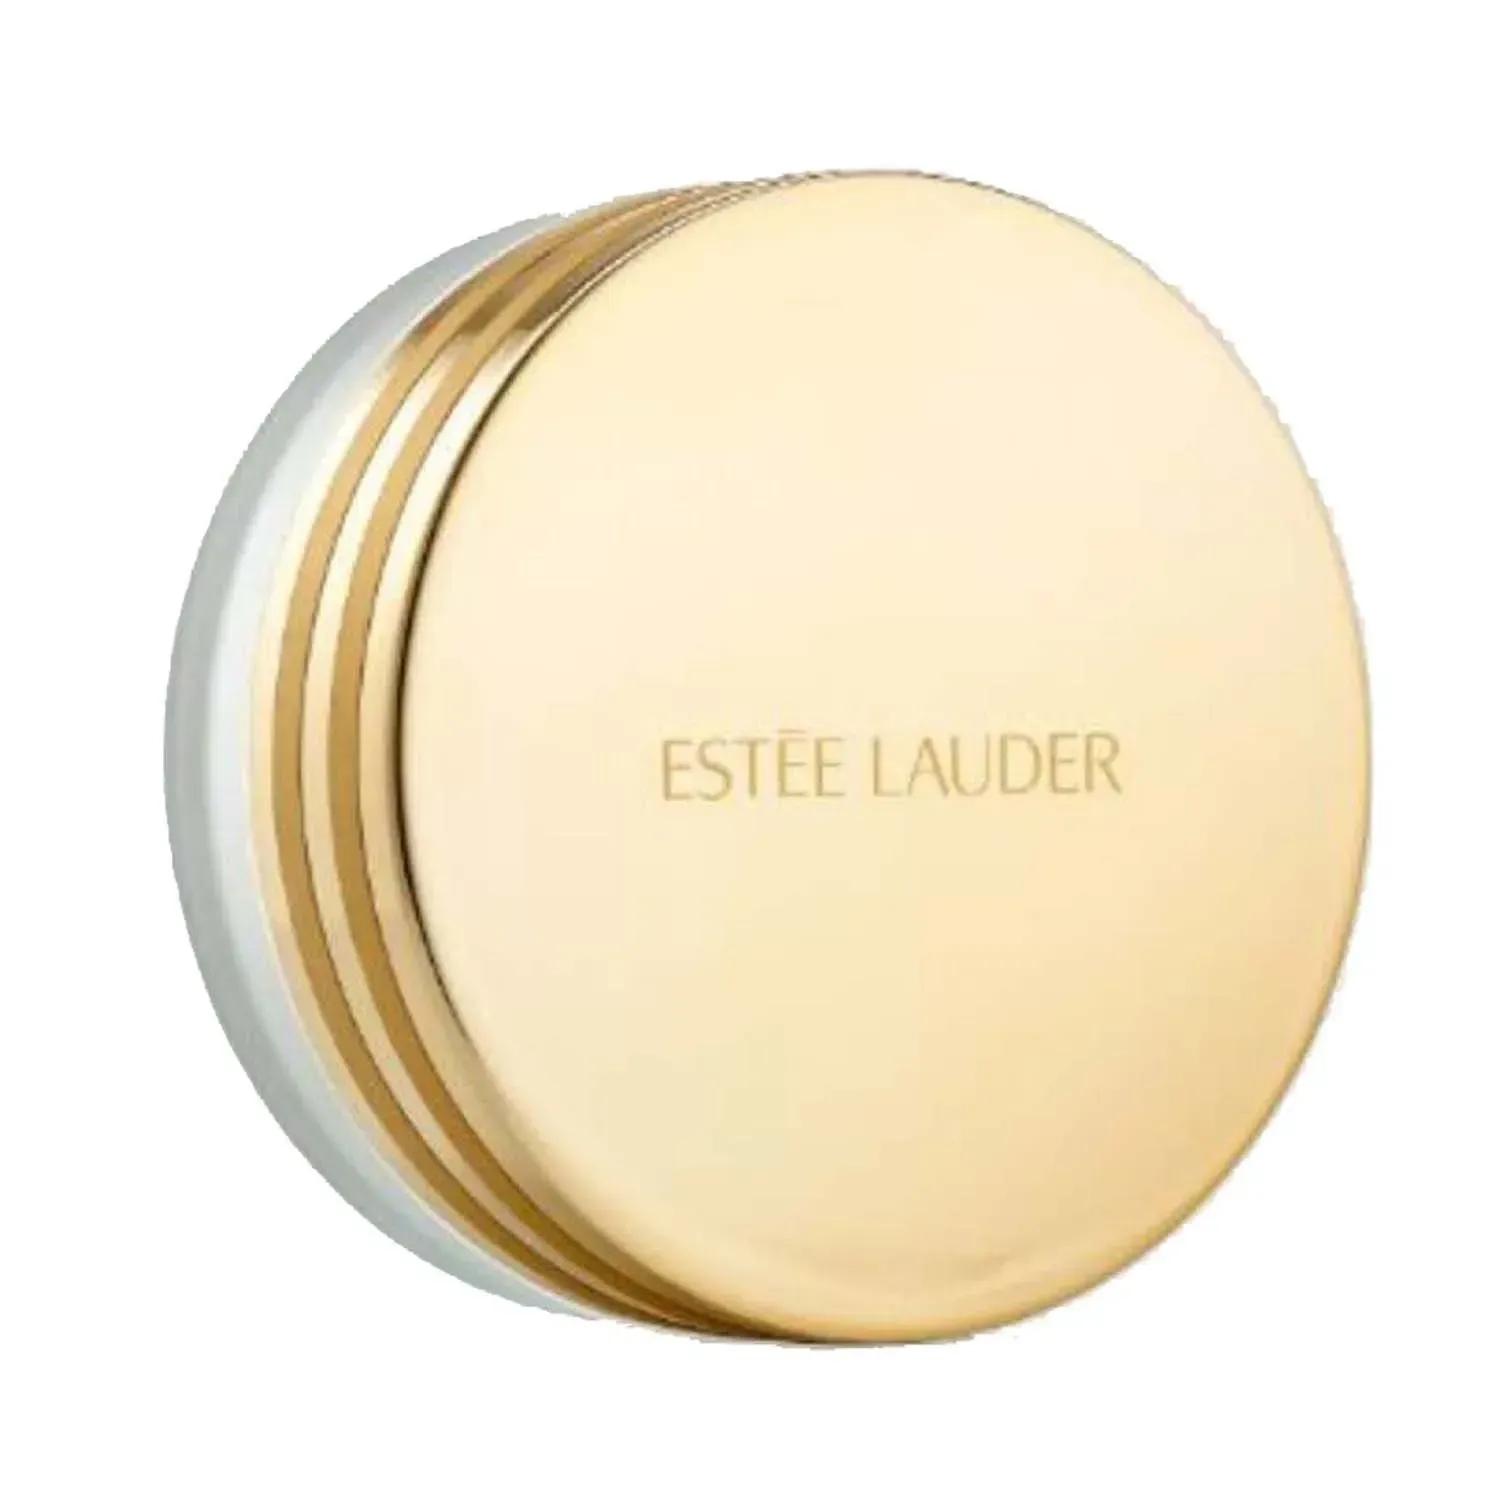 estee lauder advanced night micro cleansing balm - (70ml)